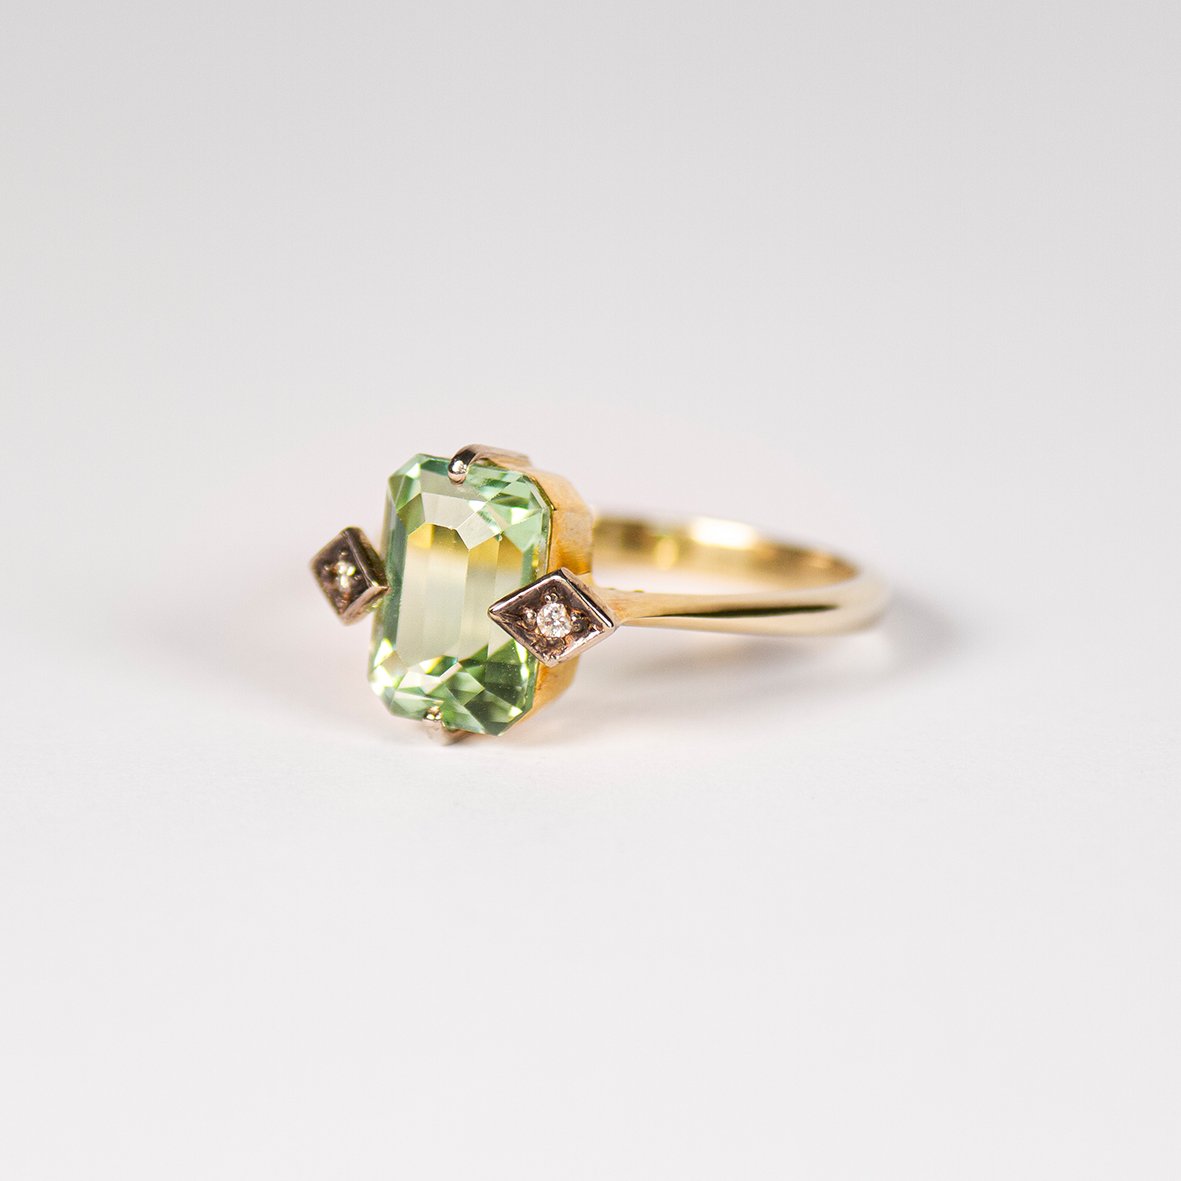 6. Emerald cut tourmaline ring_f2